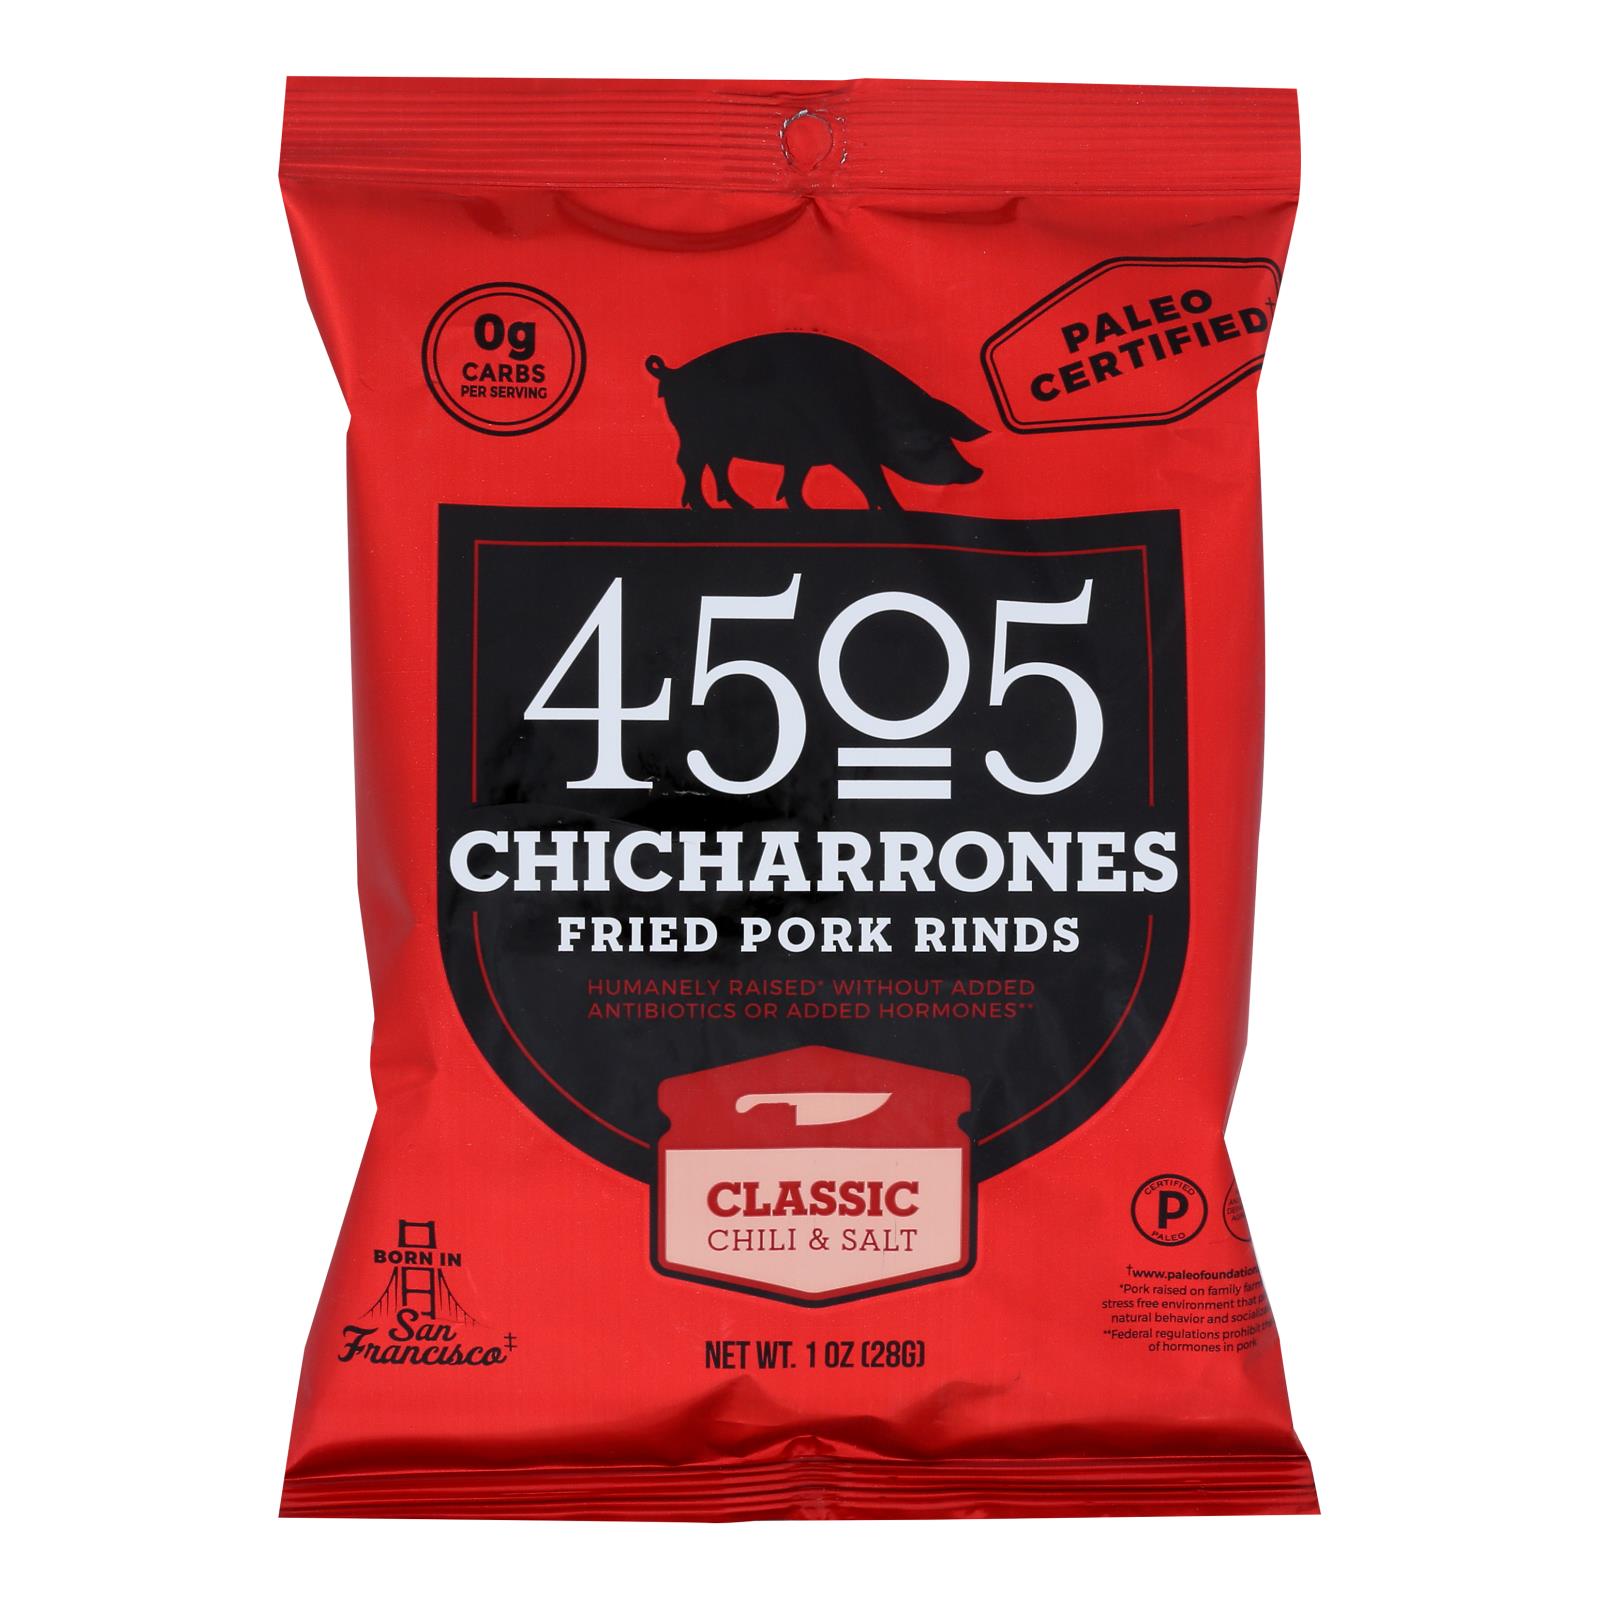 4505 - Chichrn Classic Chili & Salt - 12개 묶음상품-1 OZ